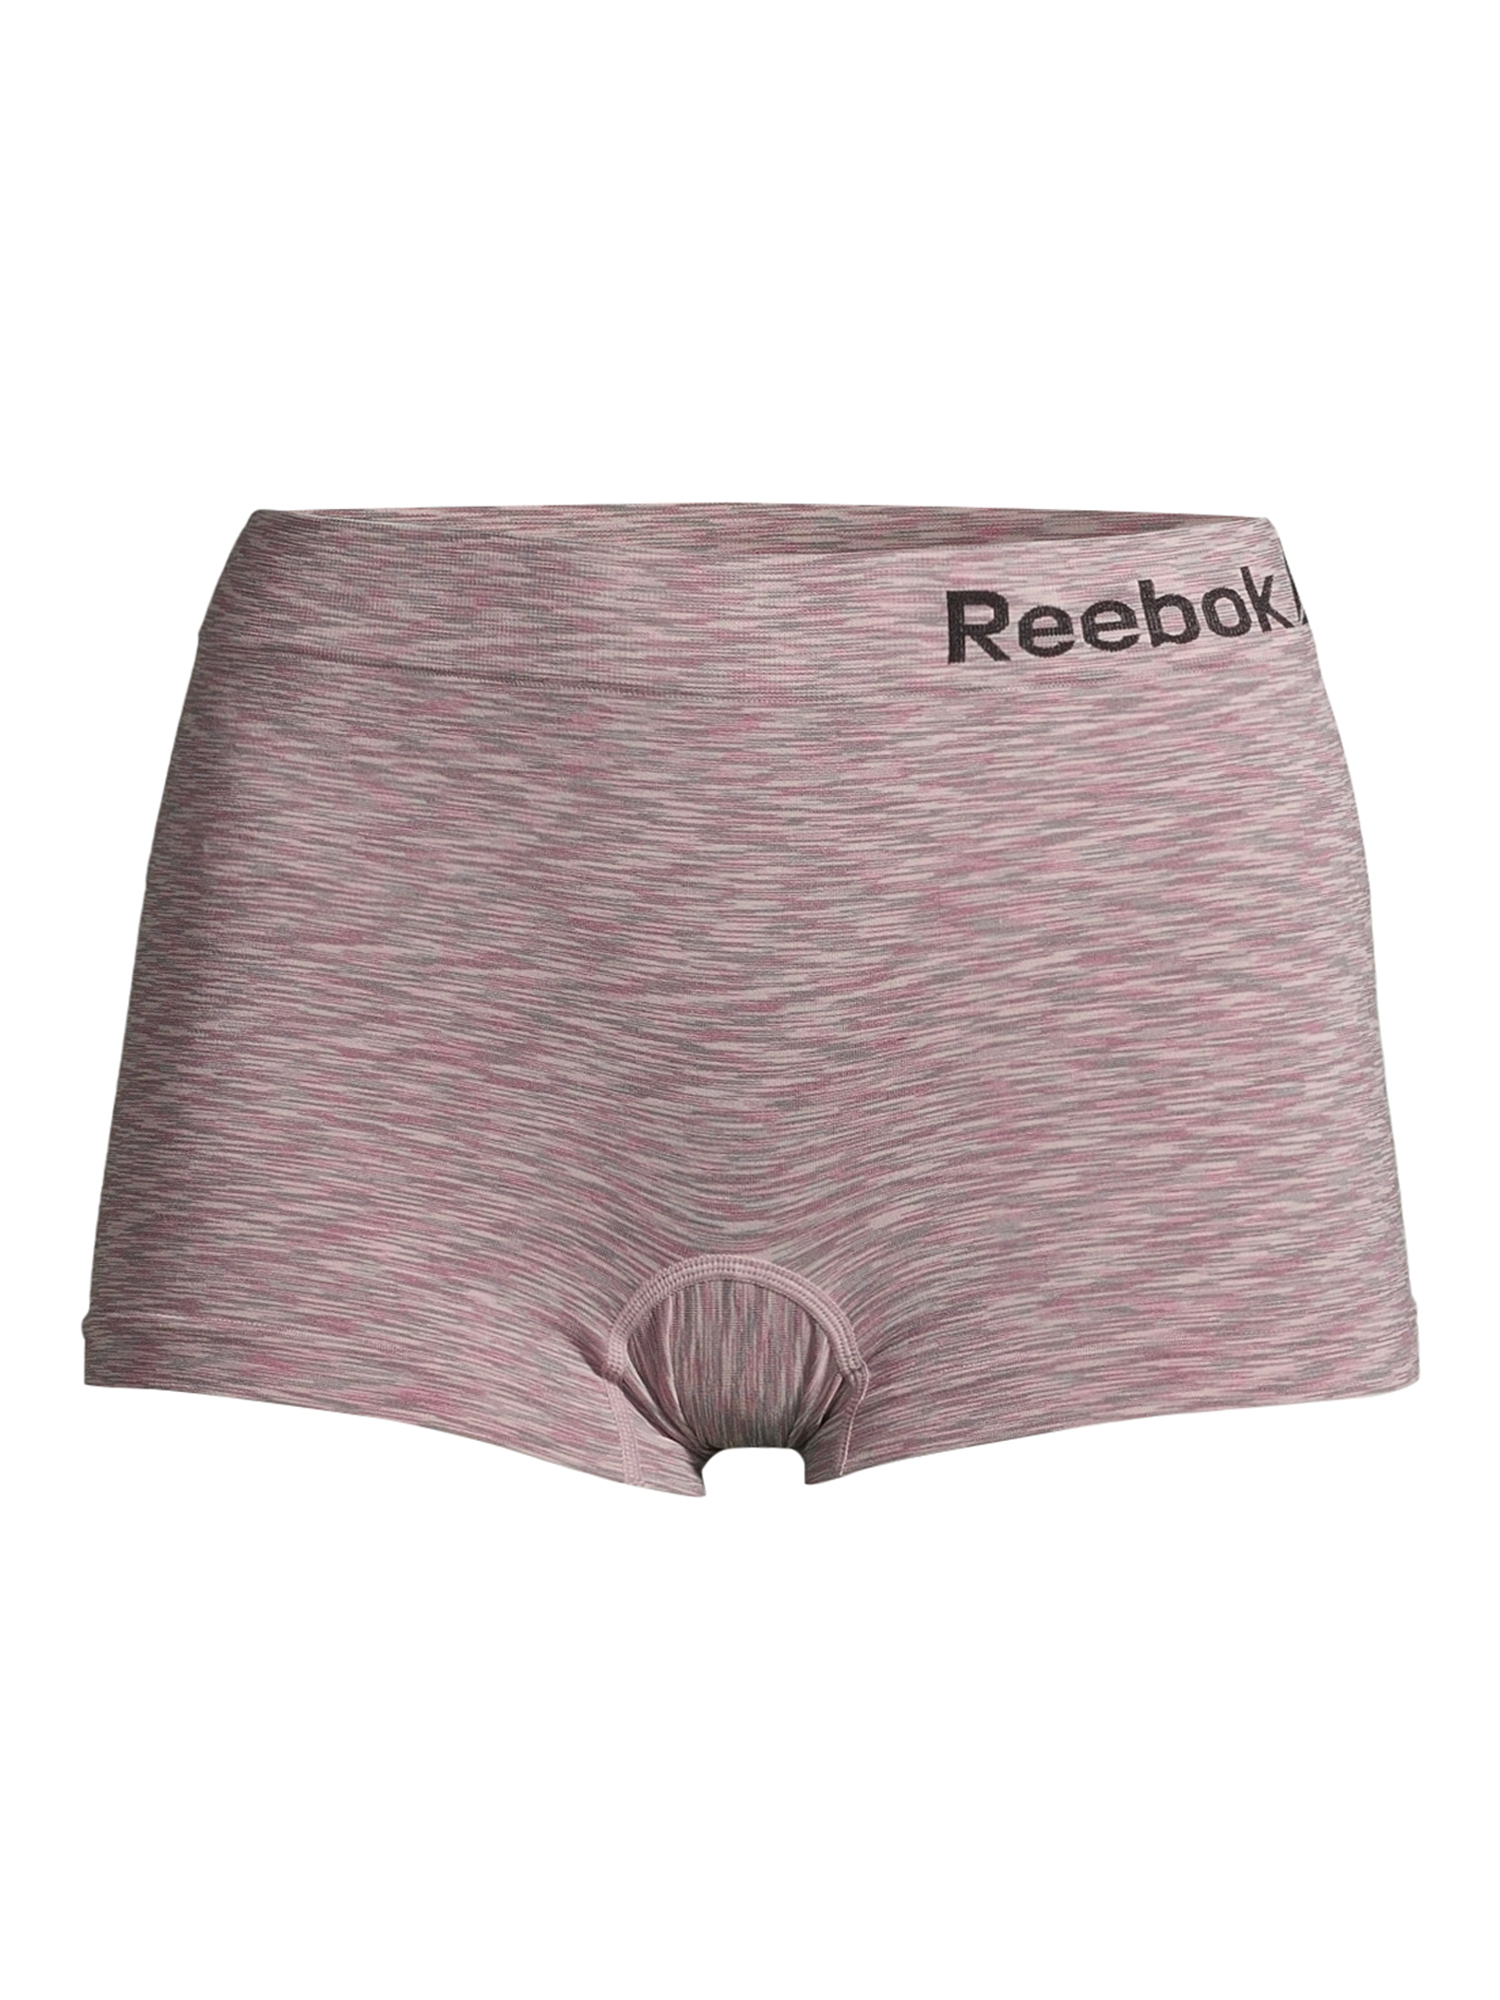 Reebok Women's Underwear Seamless Boyshort Panties, 4-Pack - image 3 of 6